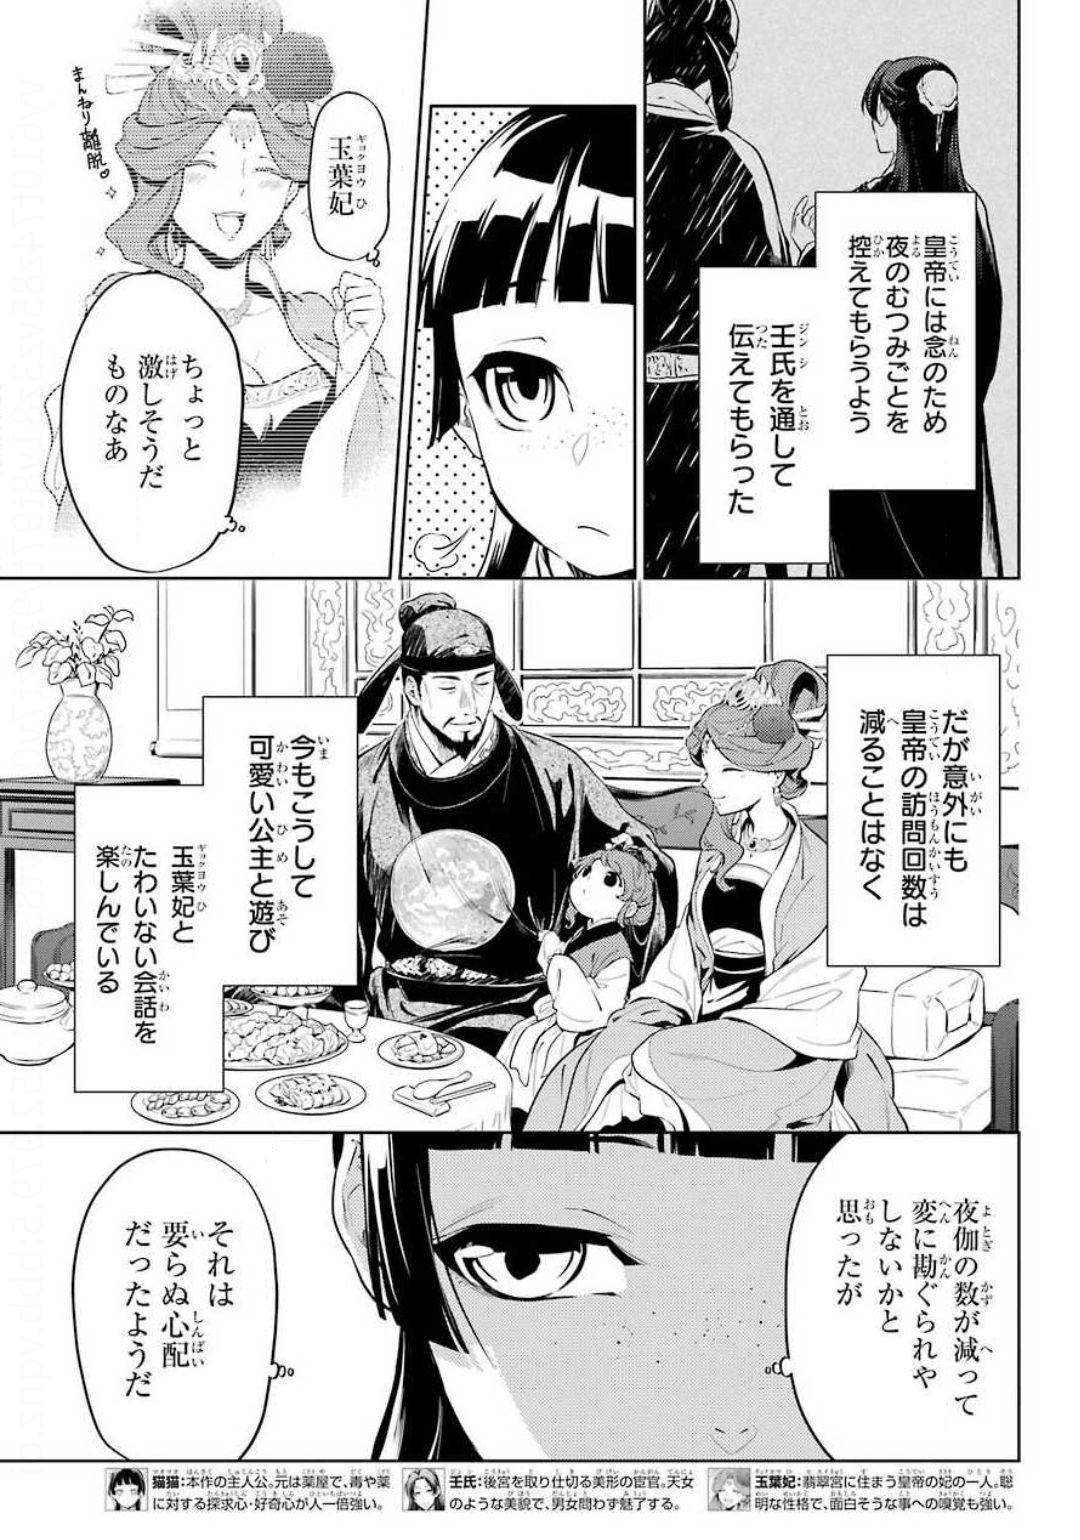 Kusuriya no Hitorigoto - Chapter 35-1 - Page 4